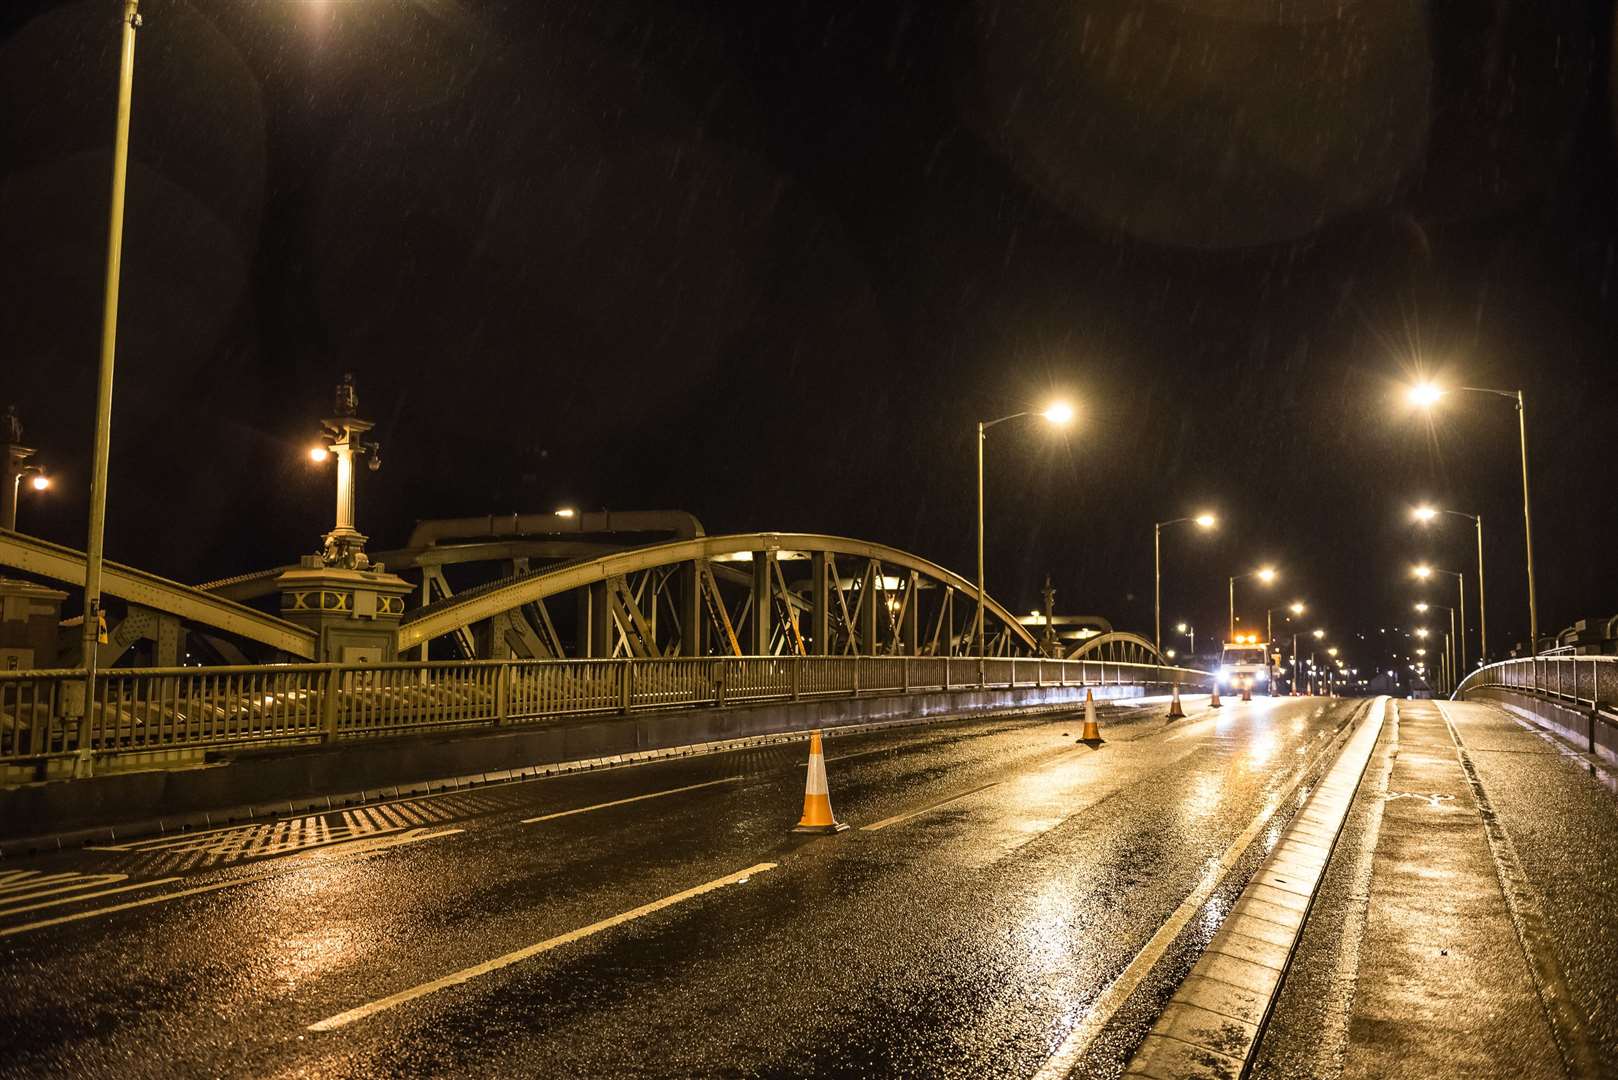 The New Bridge at night (10005789)